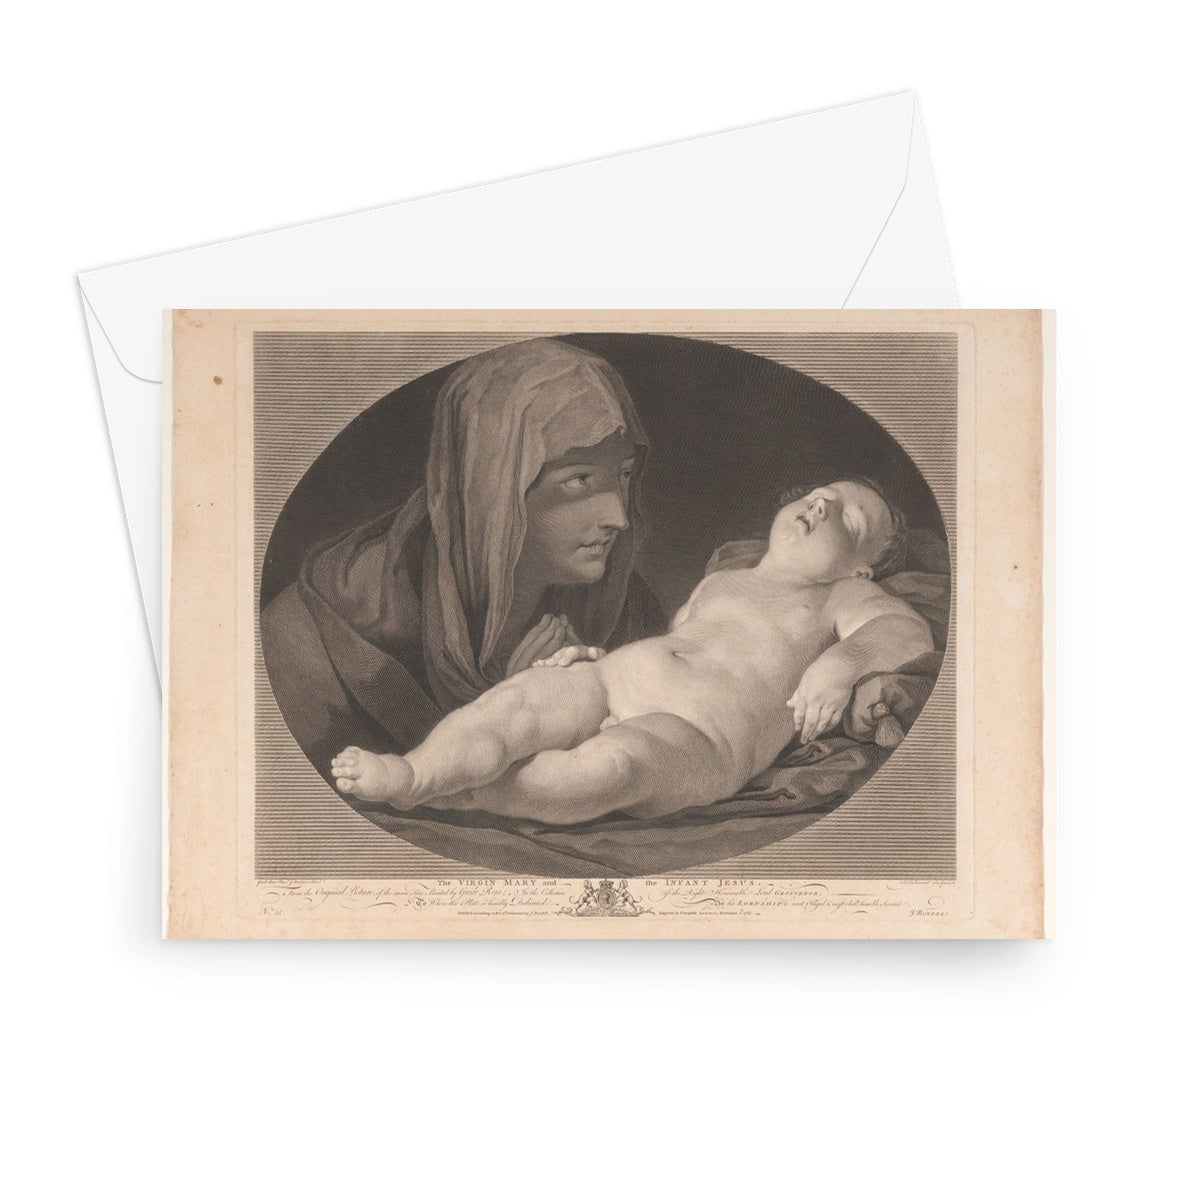 Maria bij slapende Christus, Simon François Ravenet (le vieux), after Guido Reni, after John Hamilton Mortimer, 1765 - Greeting Card